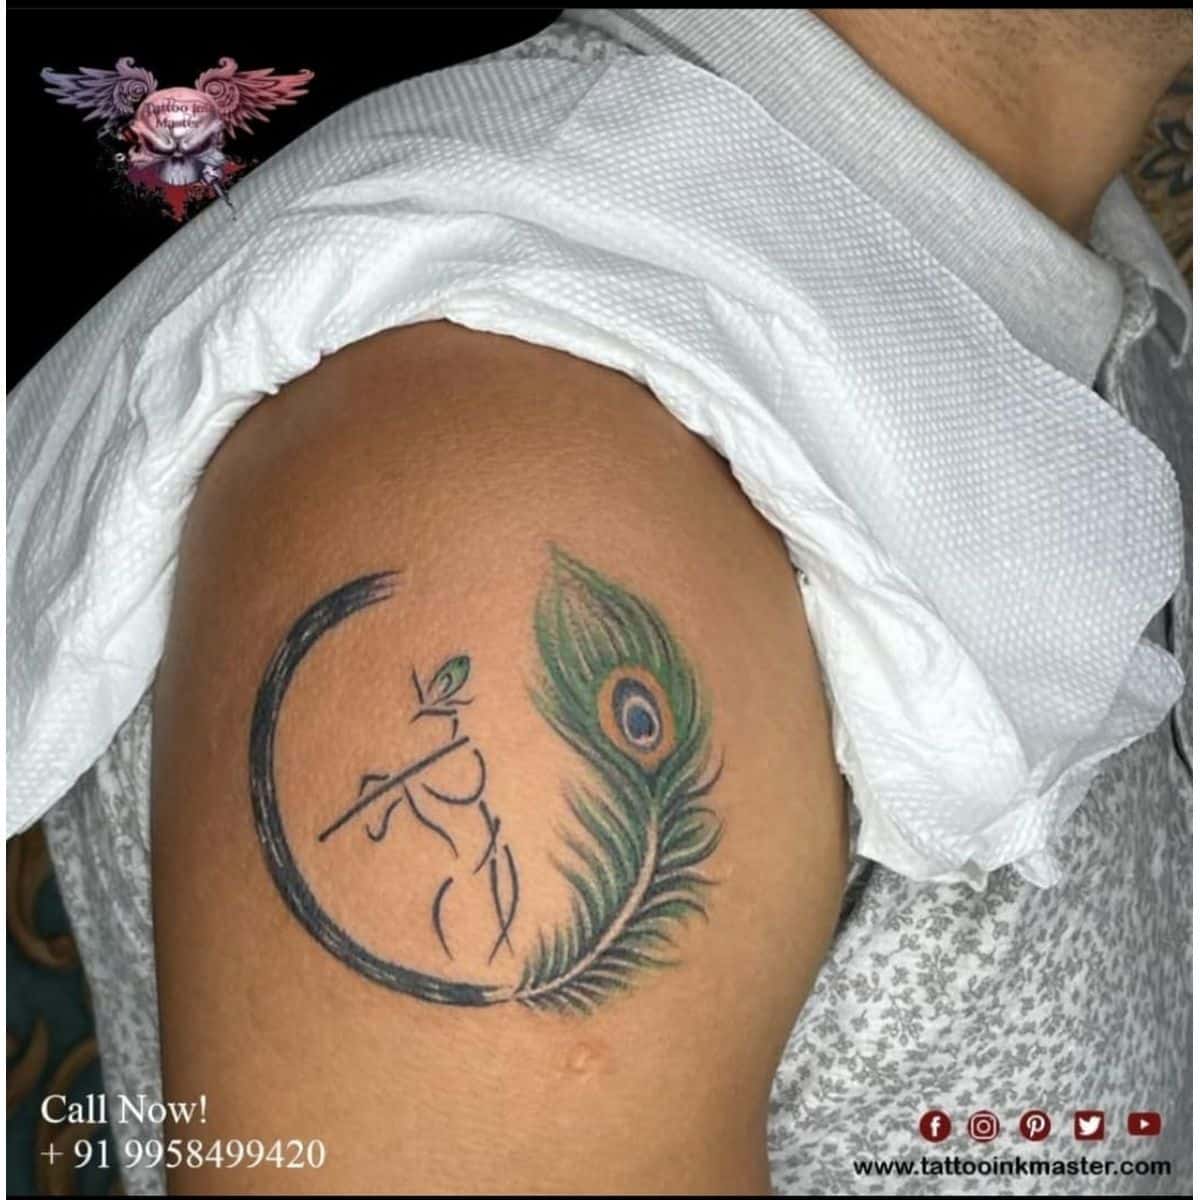 Tattoo uploaded by Samurai Tattoo mehsana • Flute with feather tattoo  design |Flute with feather tattoo |Peacock feather tattoo • Tattoodo